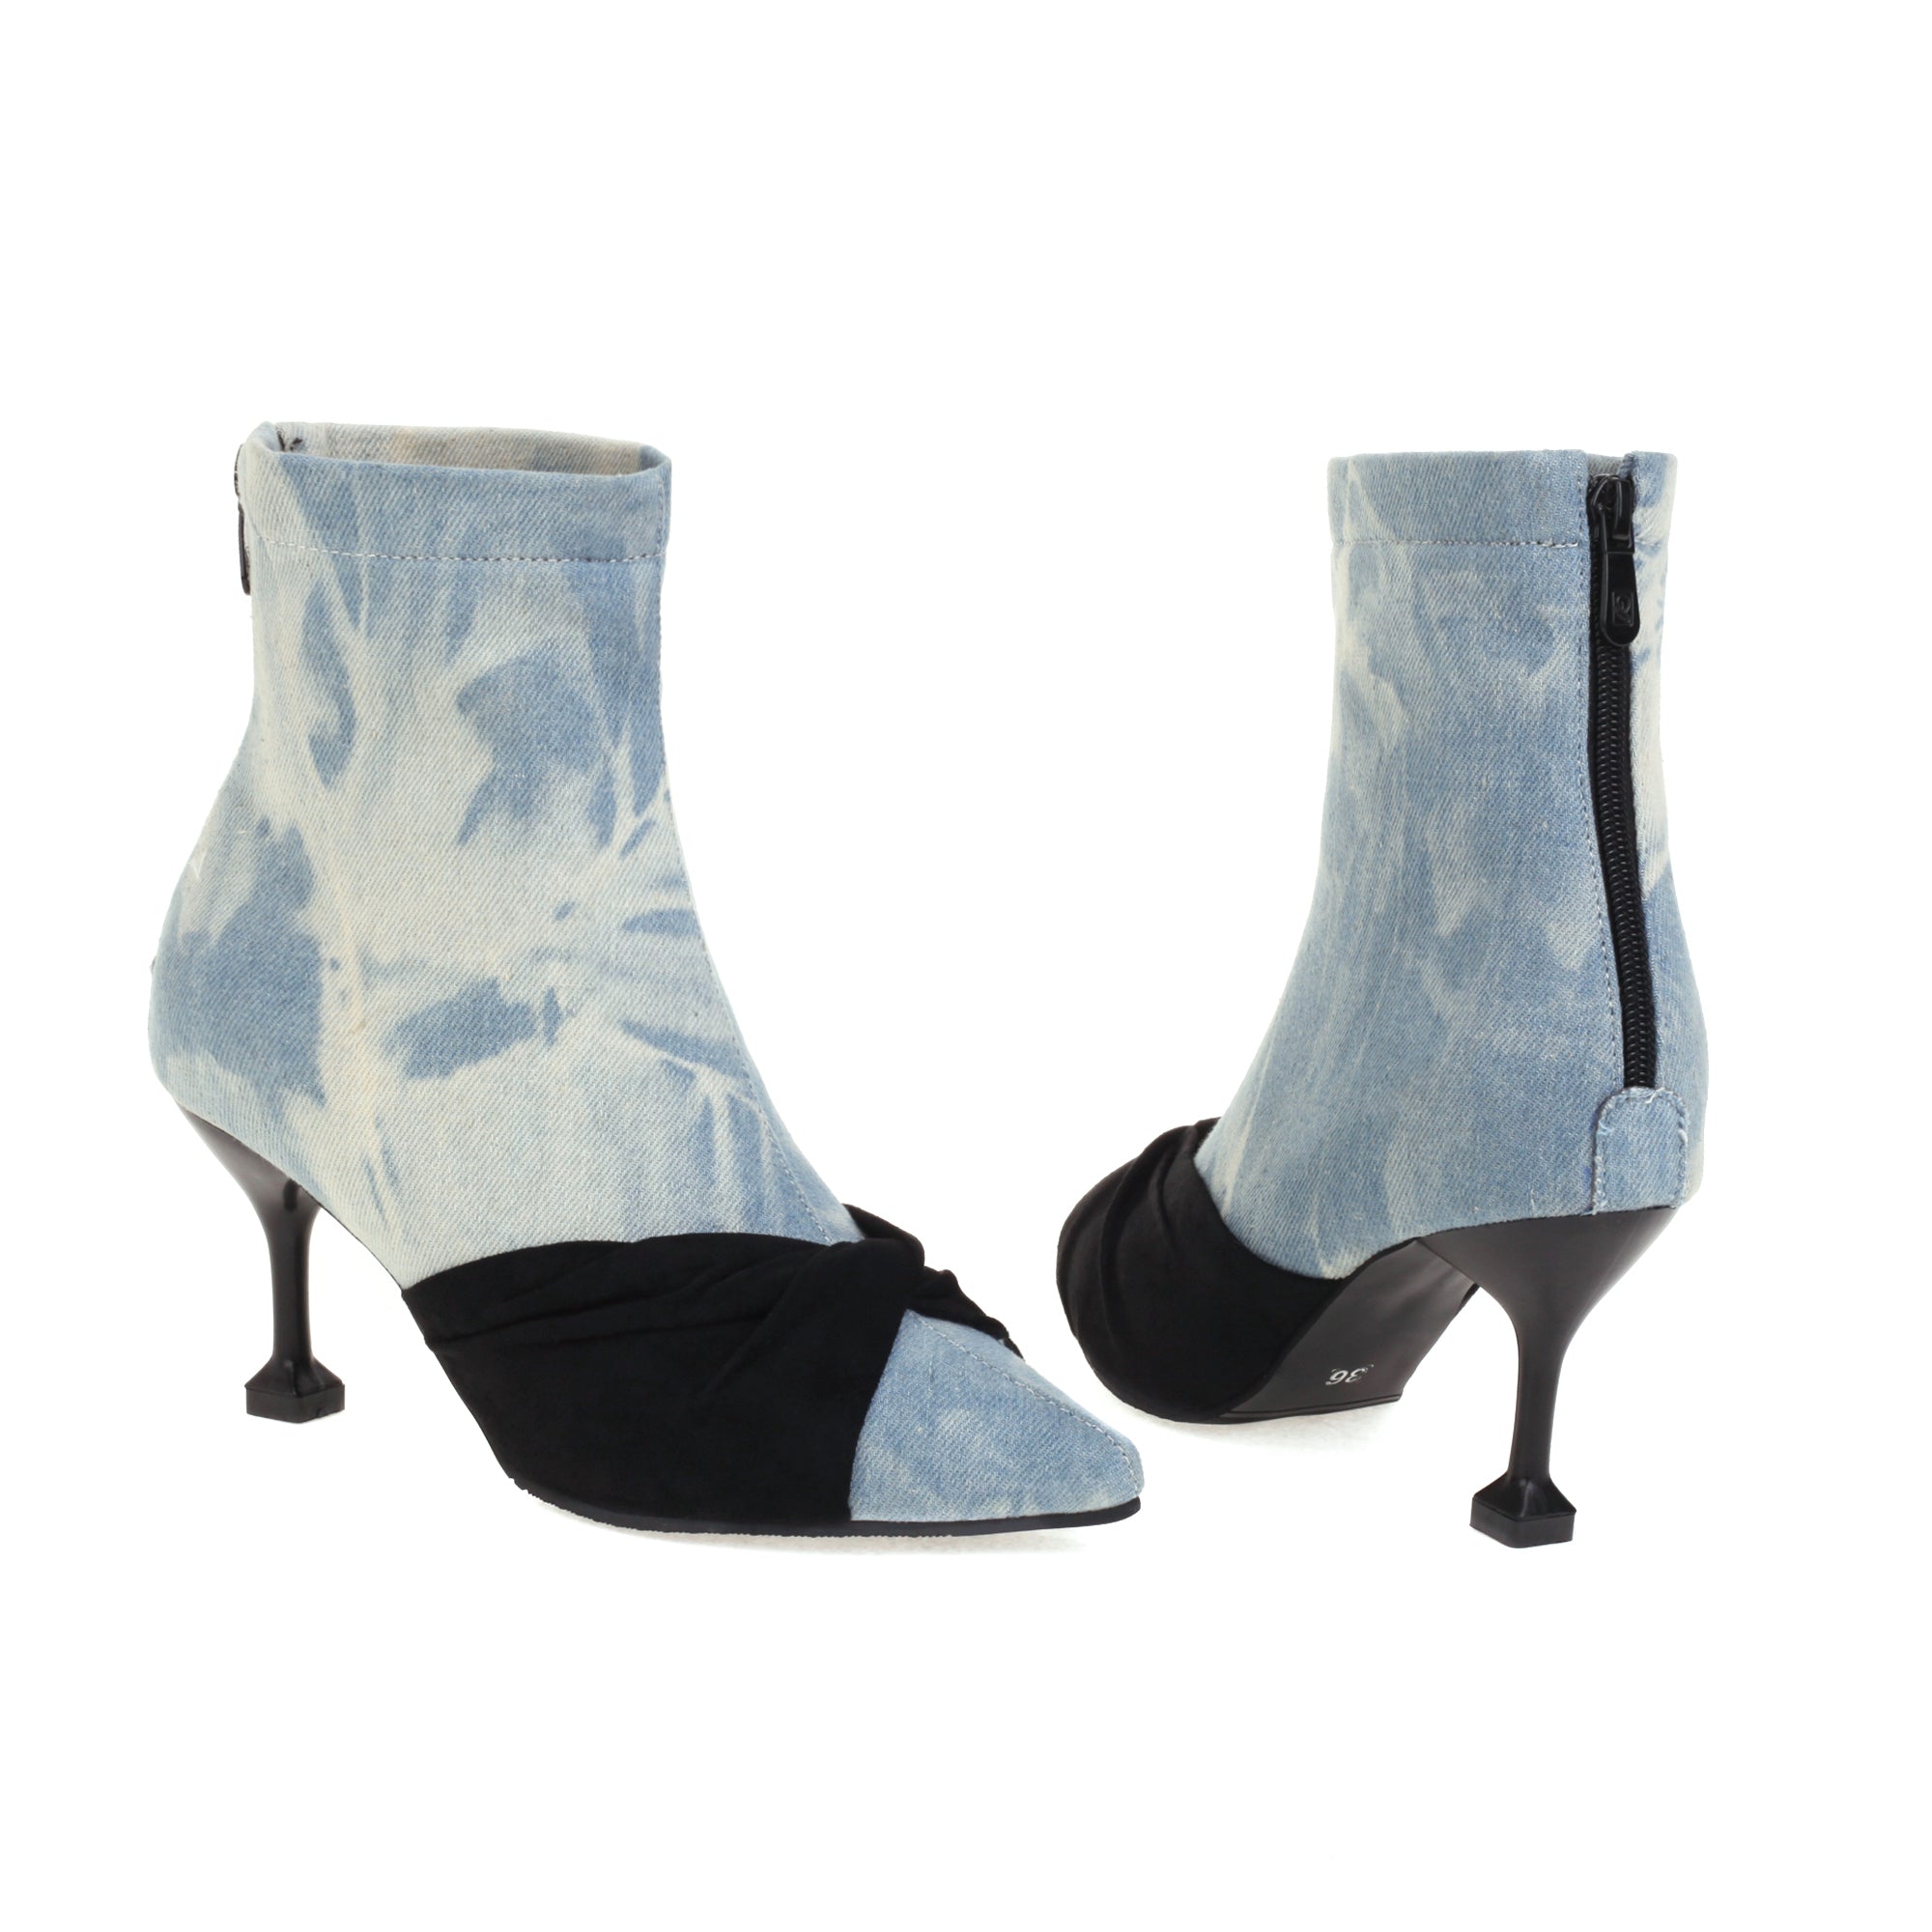 Bigsizeheels Stylish Slip-On Stiletto Heel Pointed Toe Banquet Thin Shoes - Light blue freeshipping - bigsizeheel®-size5-size15 -All Plus Sizes Available!